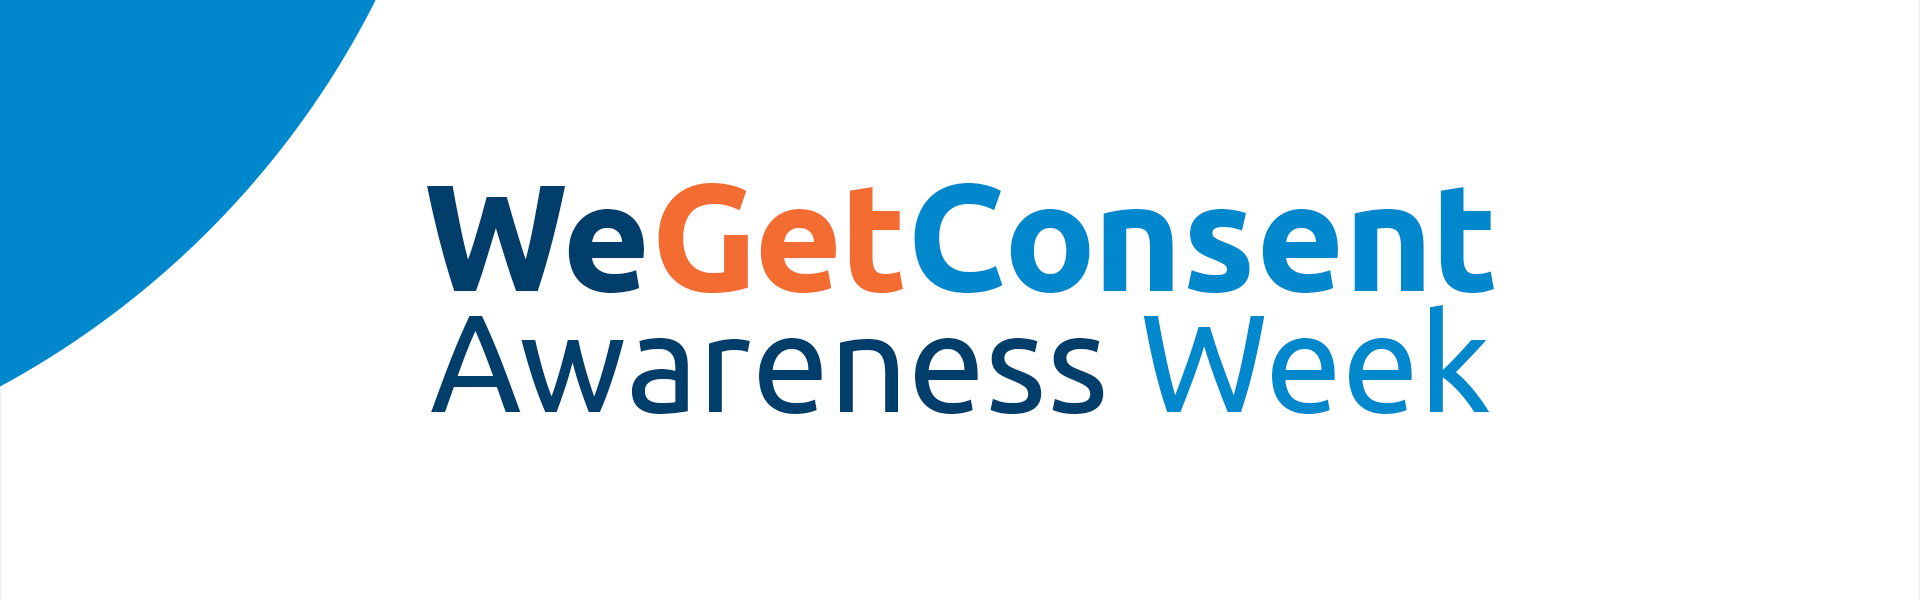 We Get Consent Awareness Week